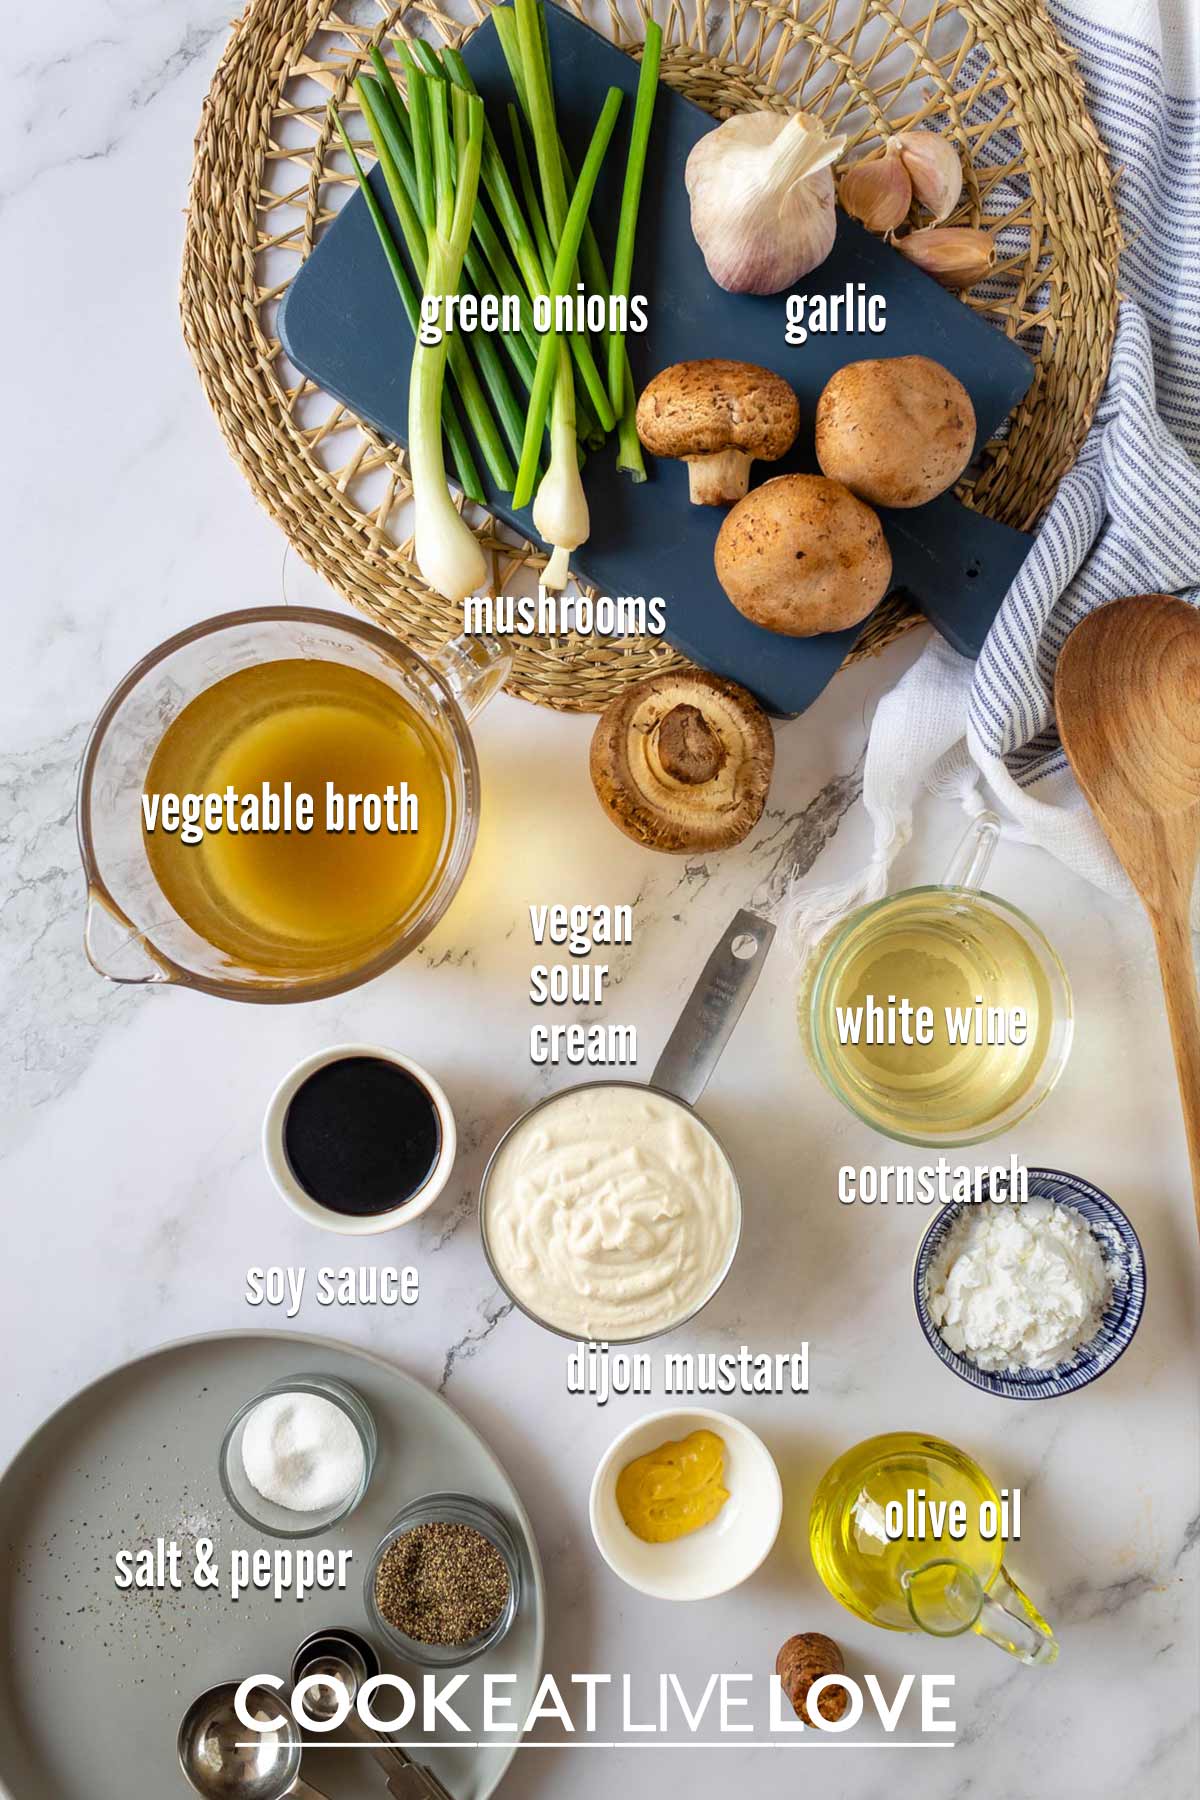 Ingredients to make vegan mushroom stroganoff on the table.